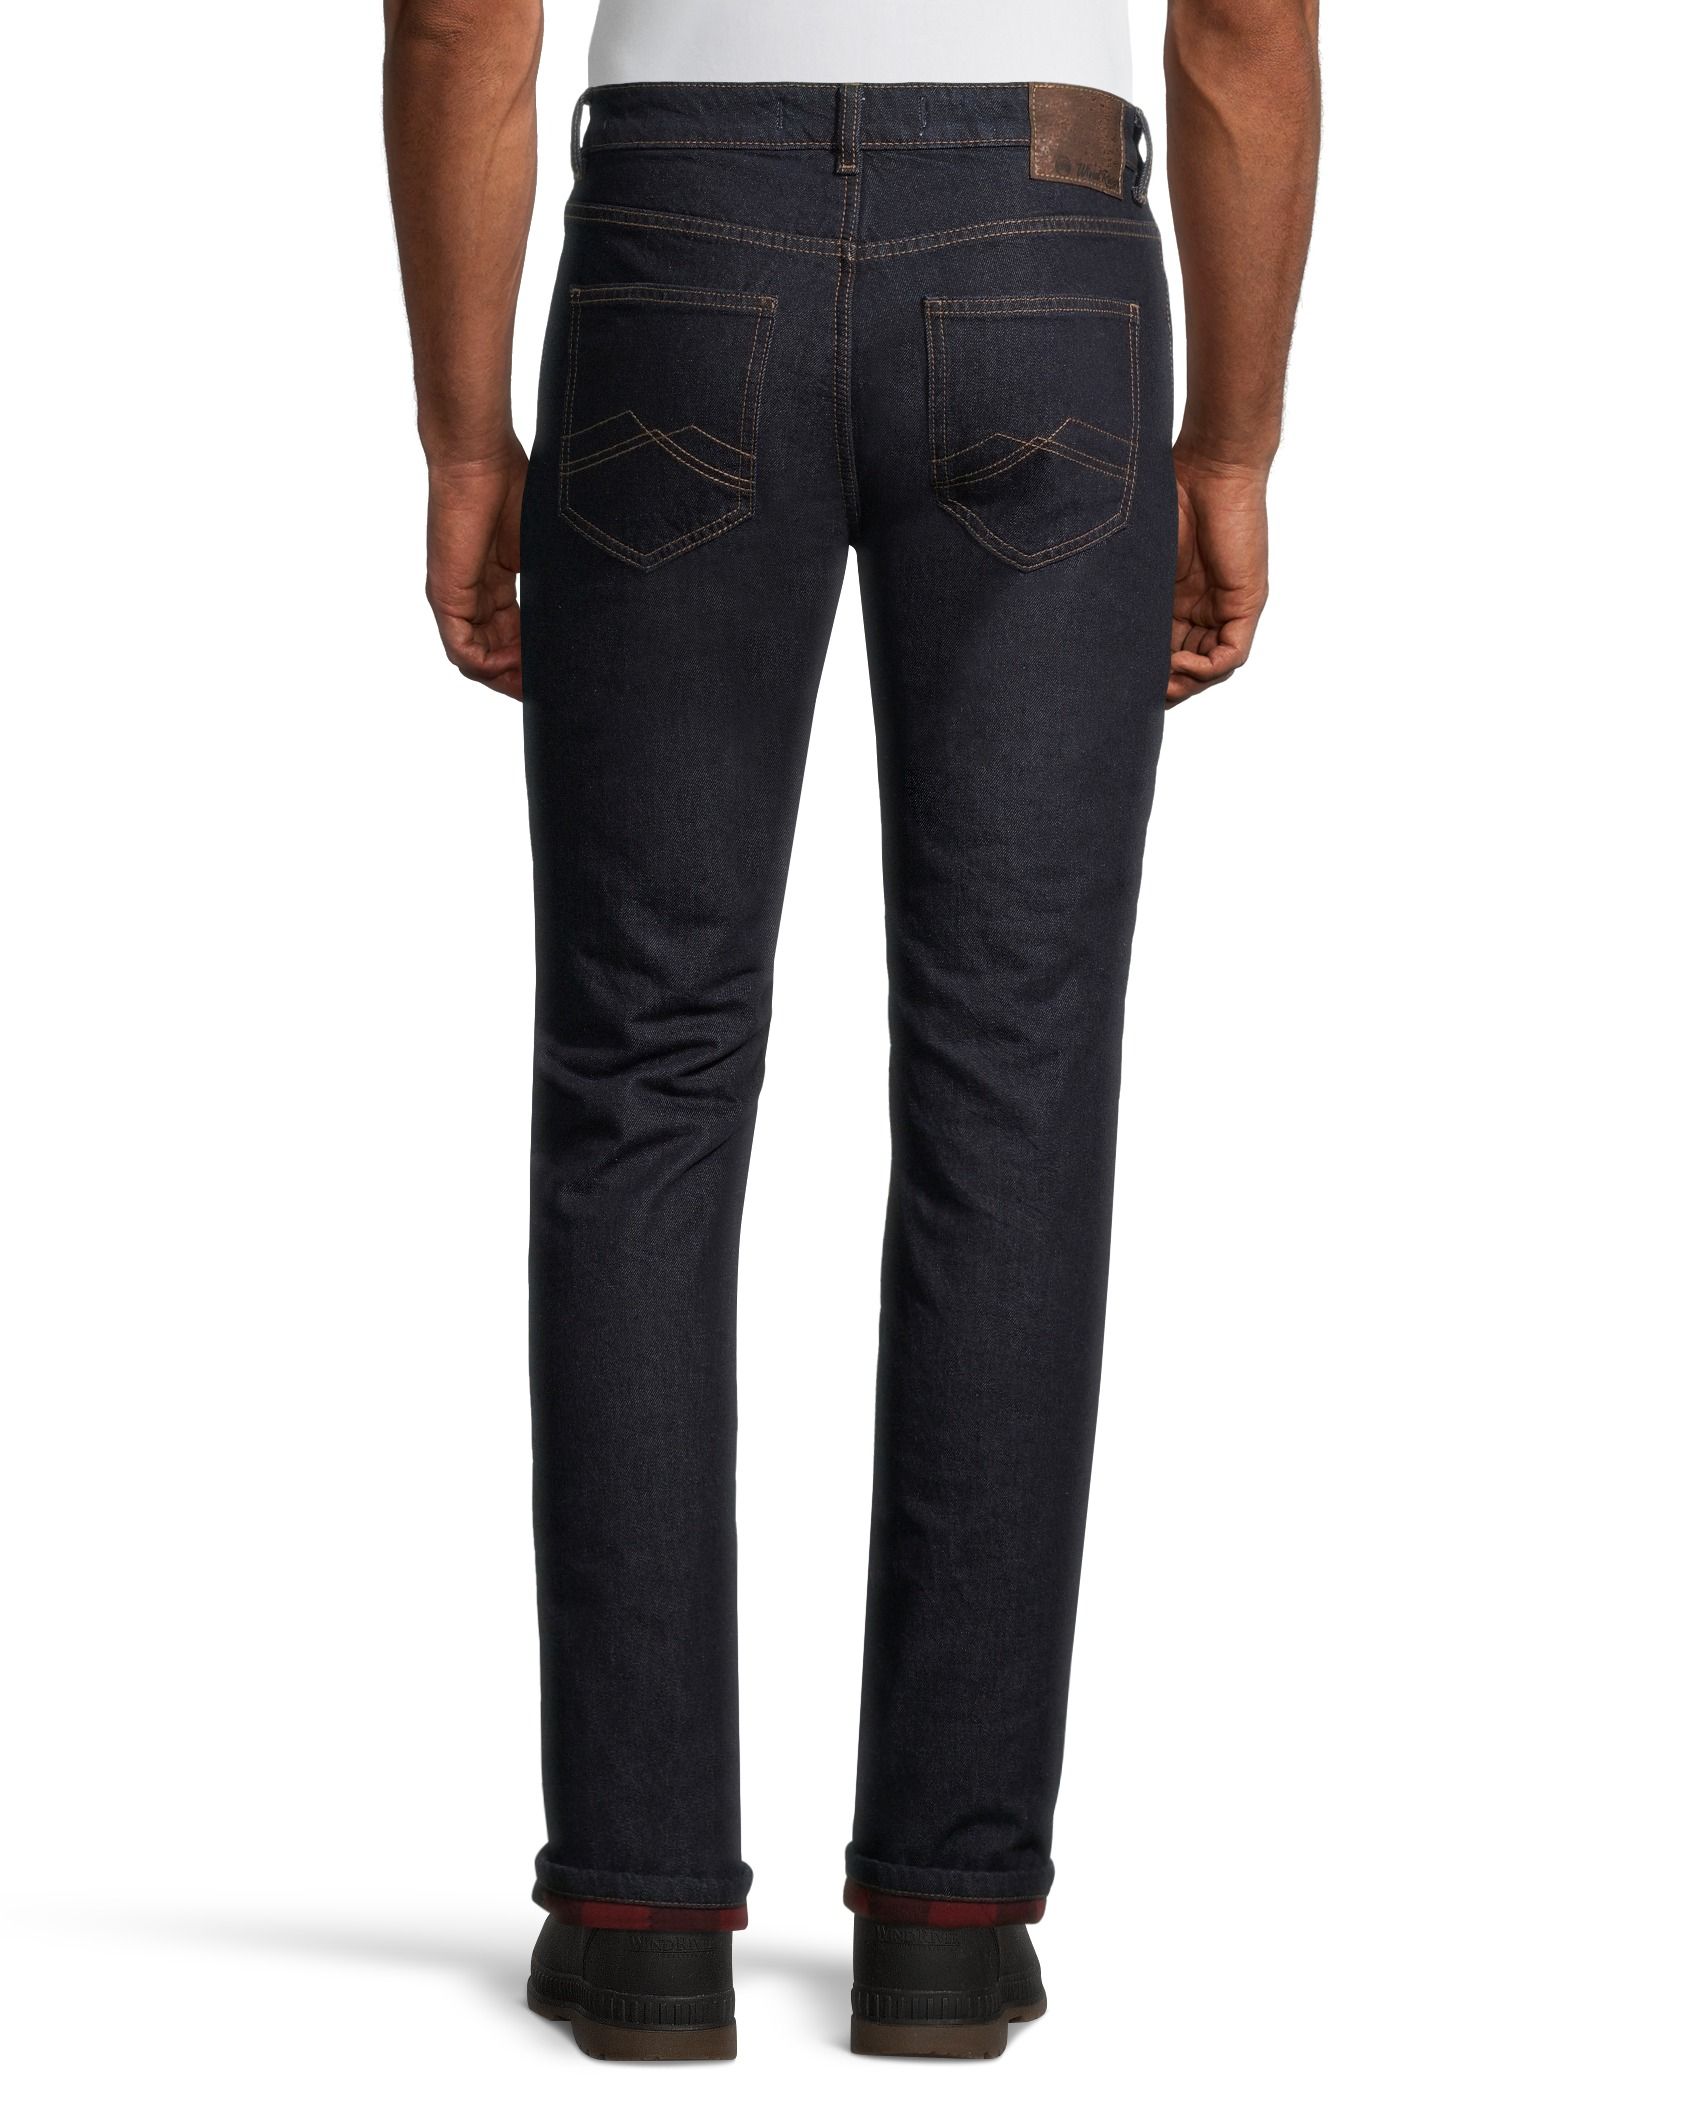 Fleece Lined Jeans - Custom Corporate Apparel Key For Business